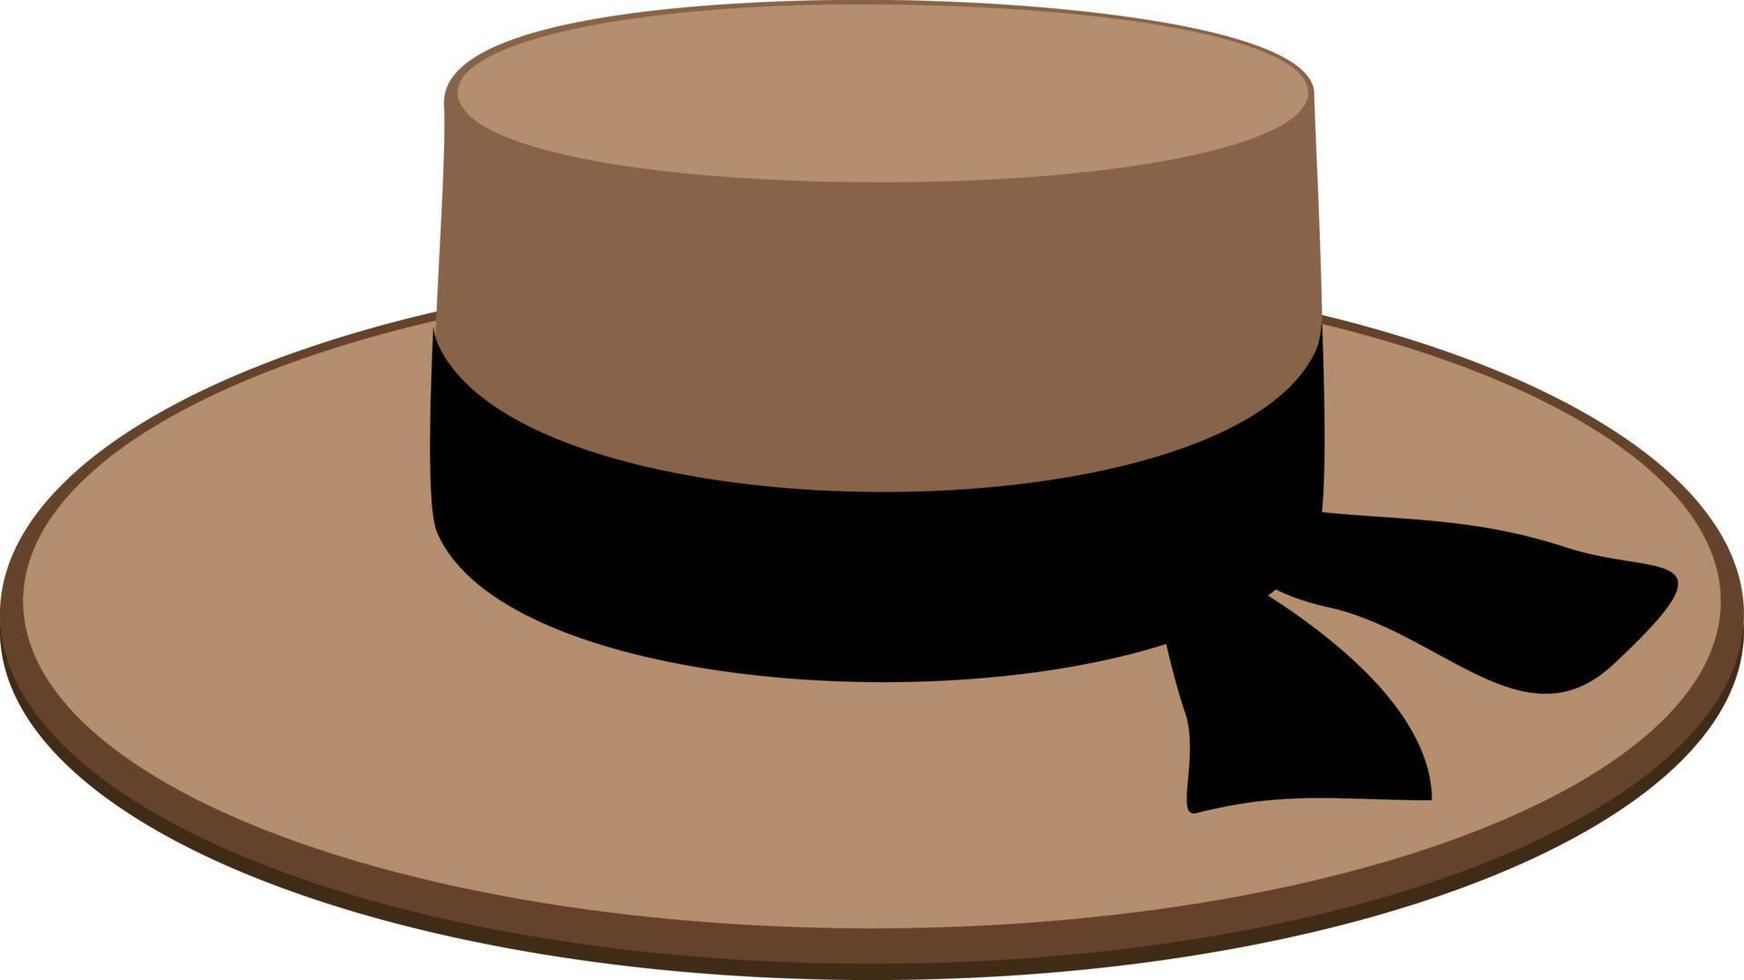 Men's hat. Black classic men's hat with brim. Vector illustration, flat design element, cartoon style